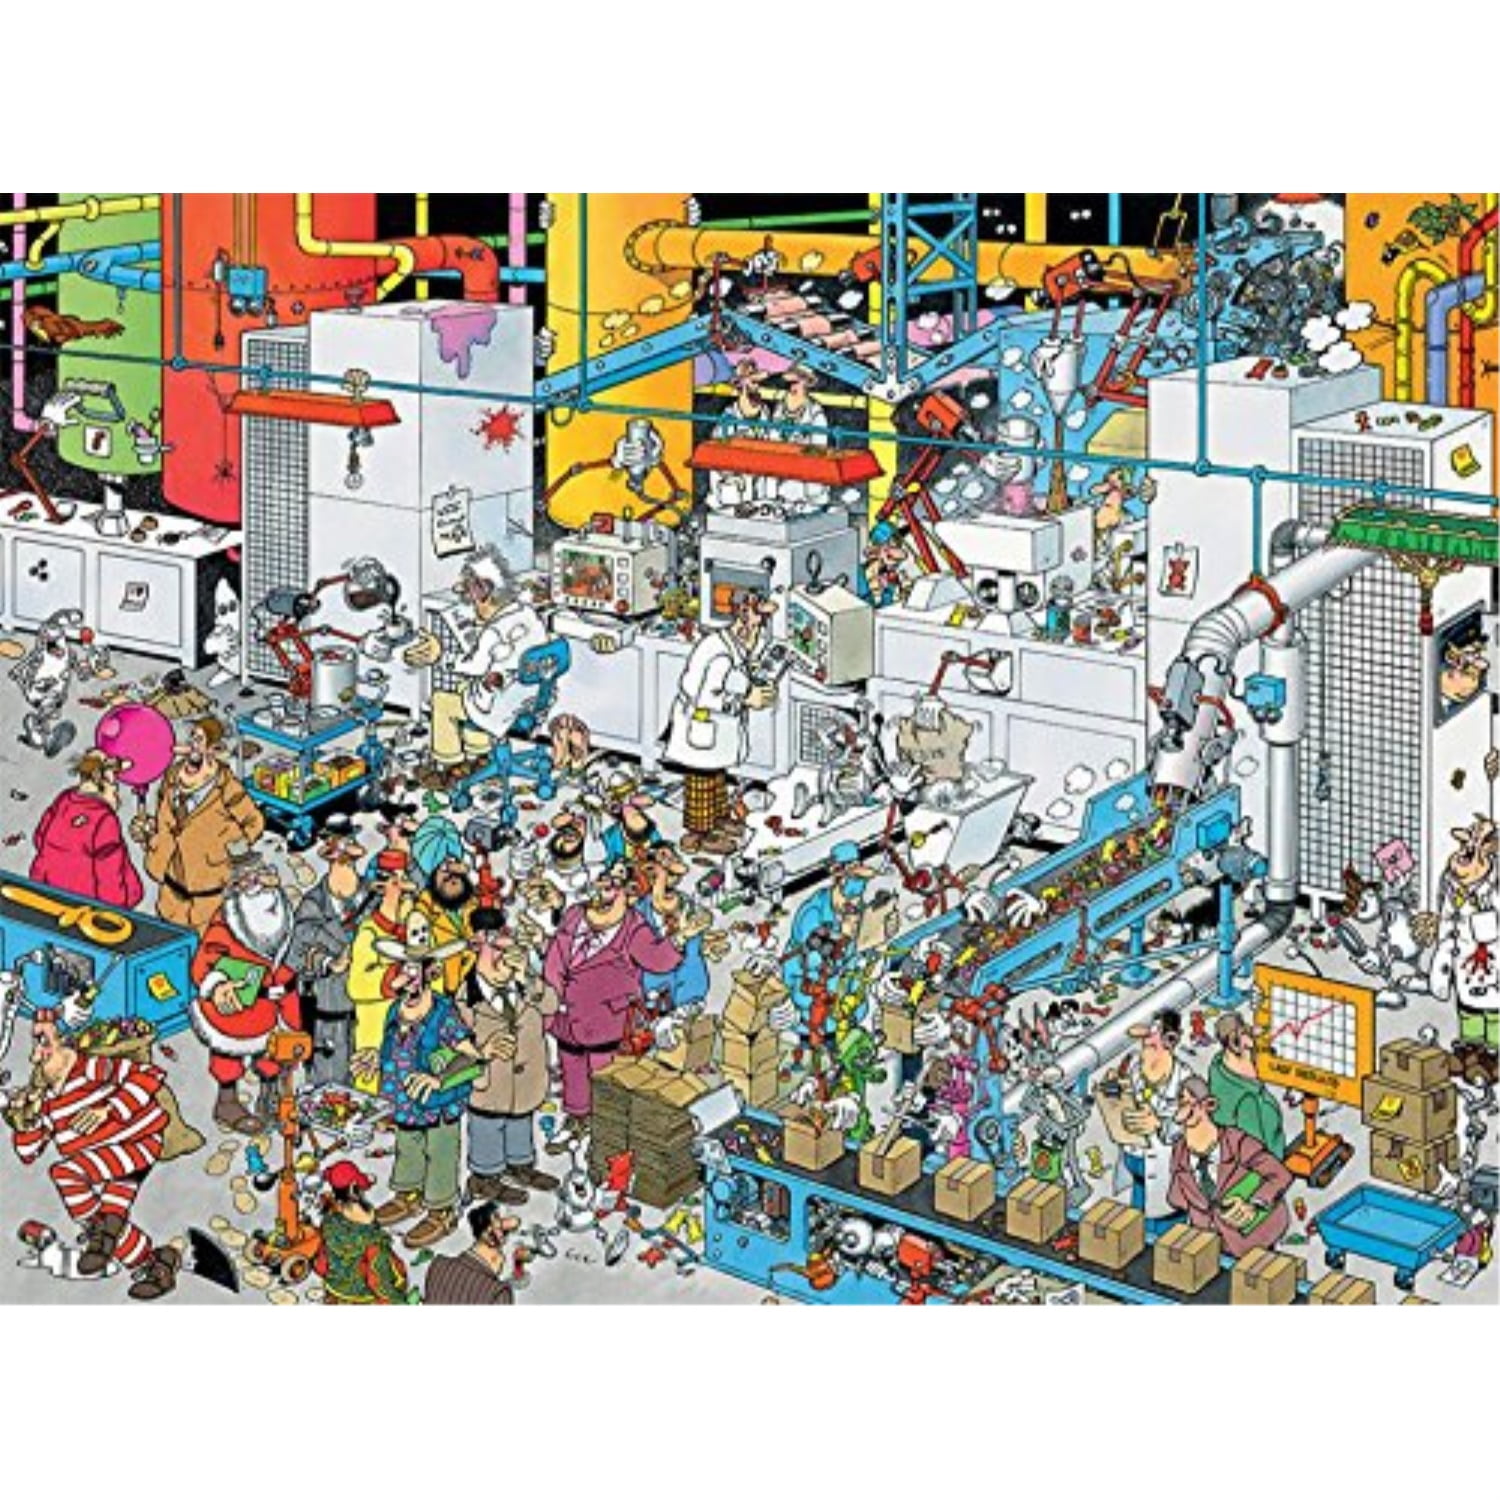 Verslagen Pessimist Schema ceaco crowd pleasers collection by jan van haasteren candy factory puzzle  (1000 piece) - Walmart.com